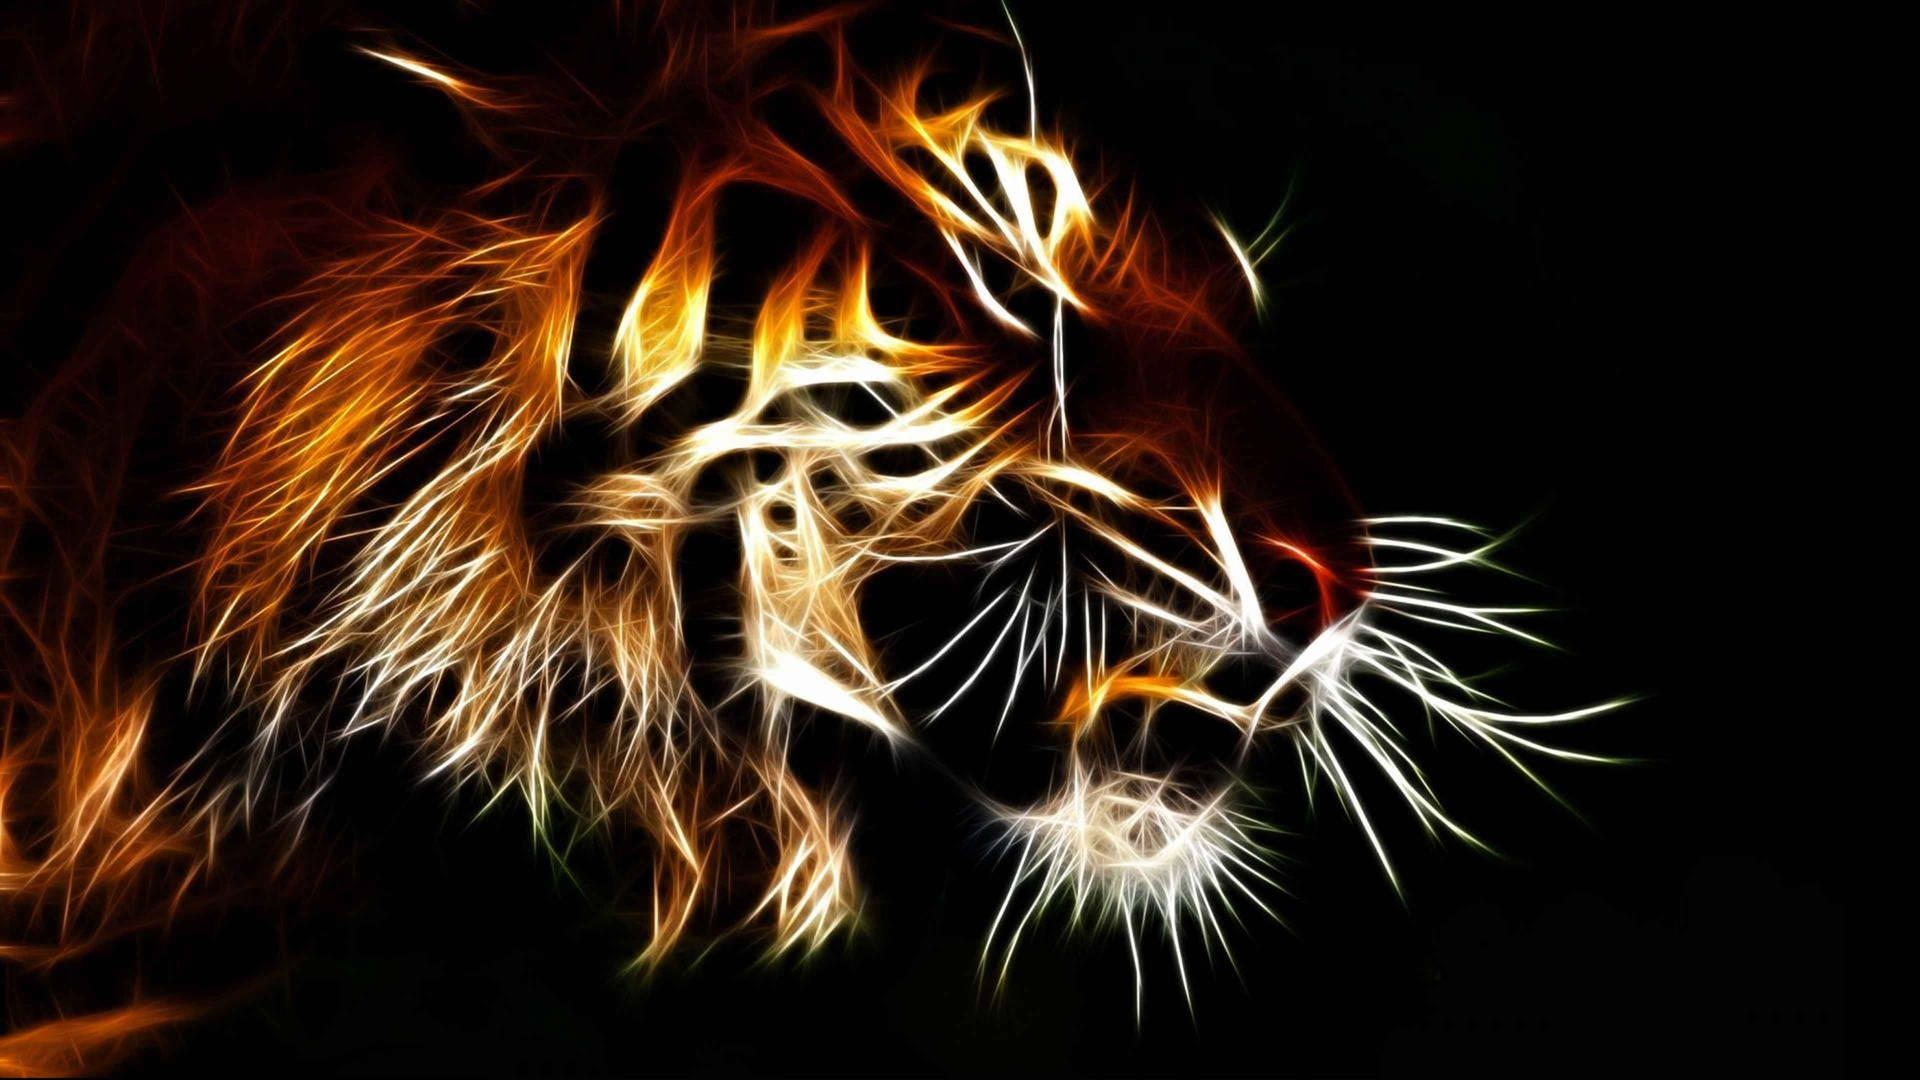 Cool Abstract Tiger Digital Art Wallpaper